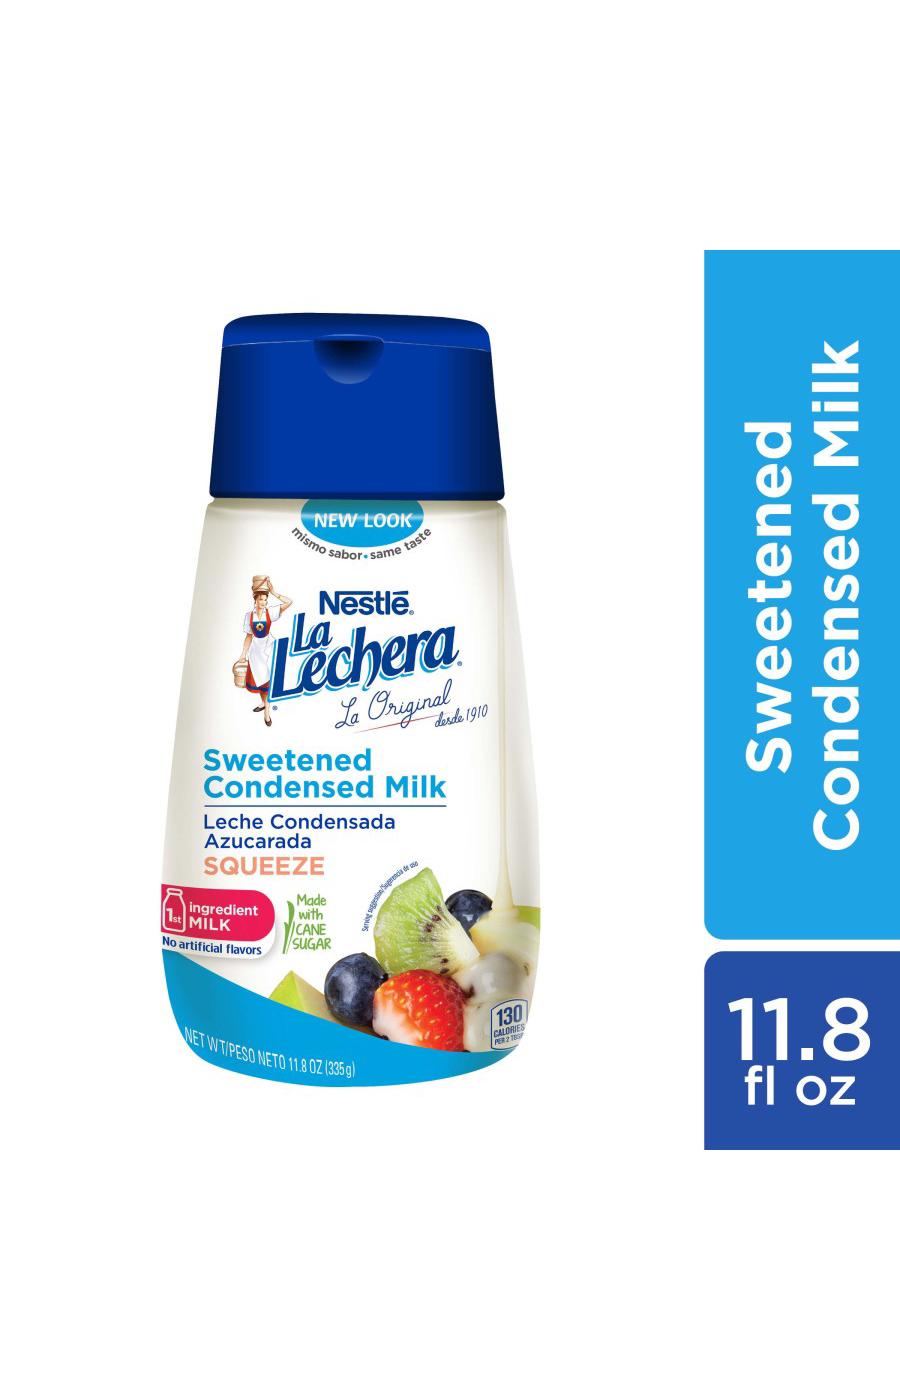 Nestle La Lechera Sweetened Condensed Milk; image 7 of 8